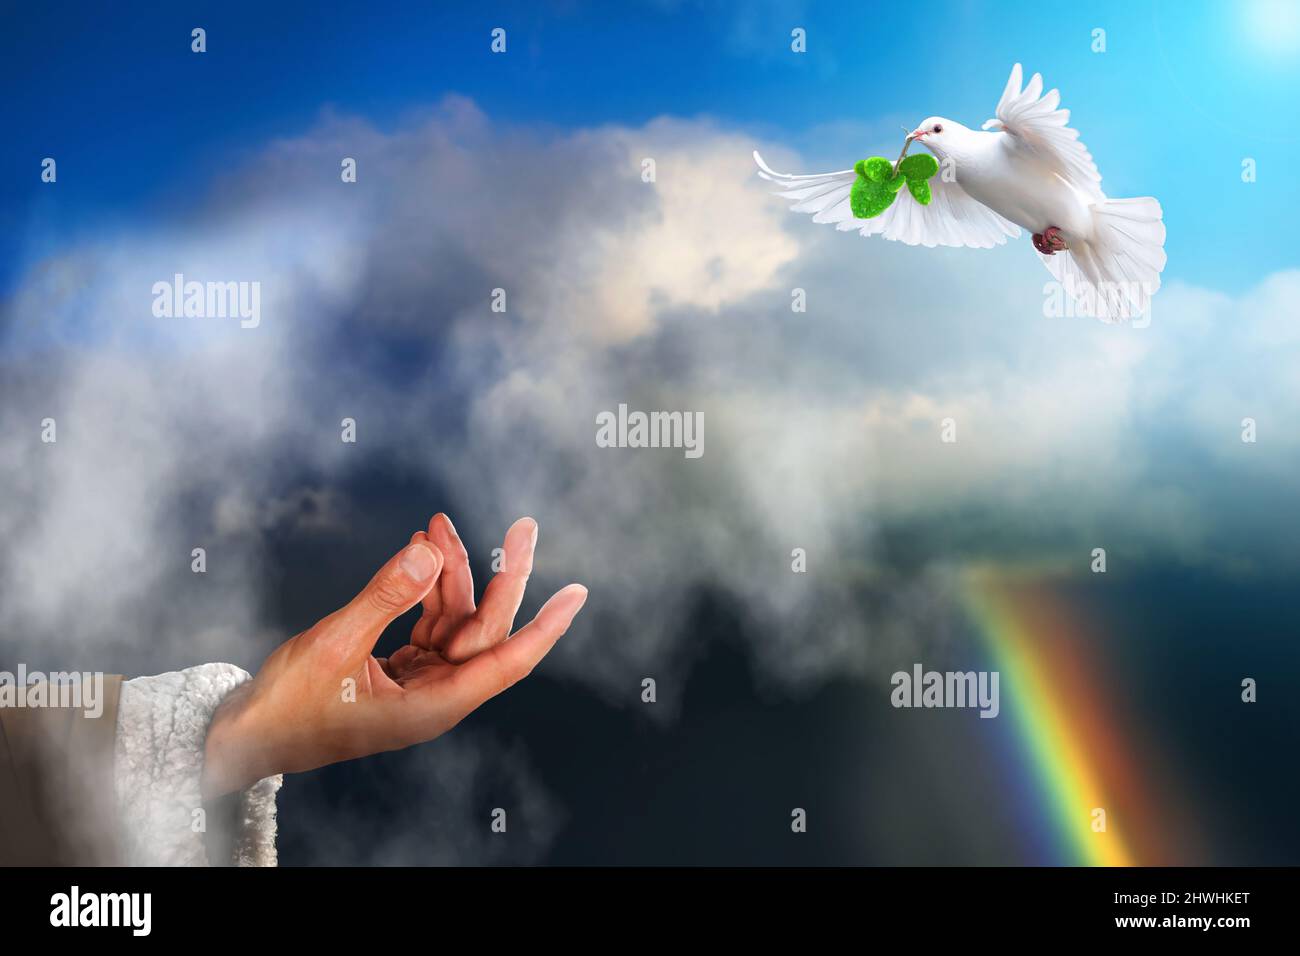 White dove bird returning to Noah carrying fresh olive leaf. Noah's ark bible story theme concept. Stock Photo